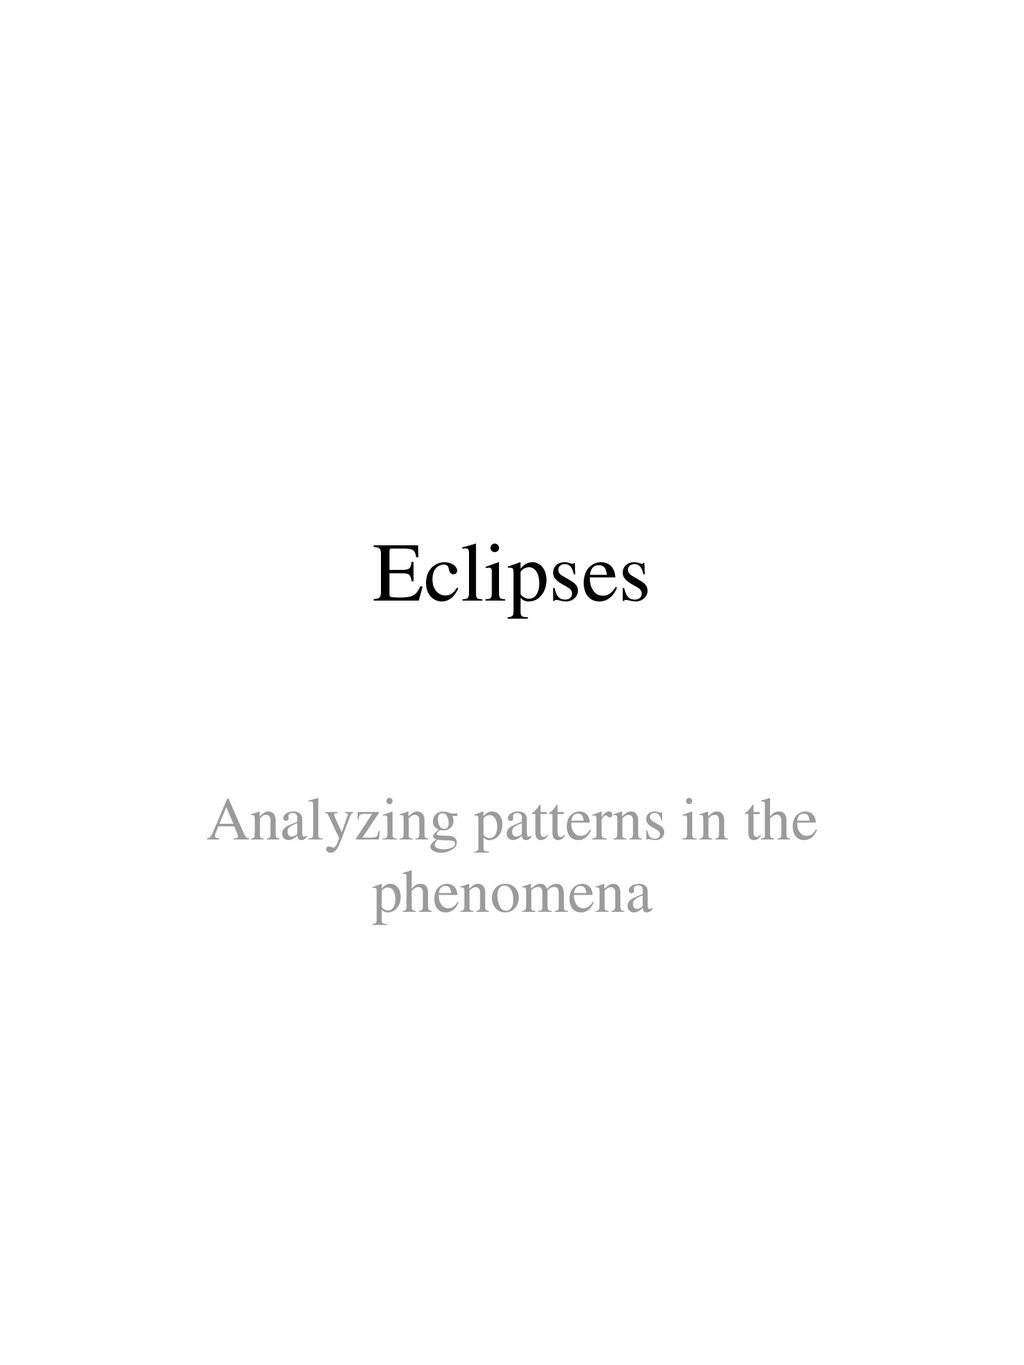 Analyzing patterns in the phenomena